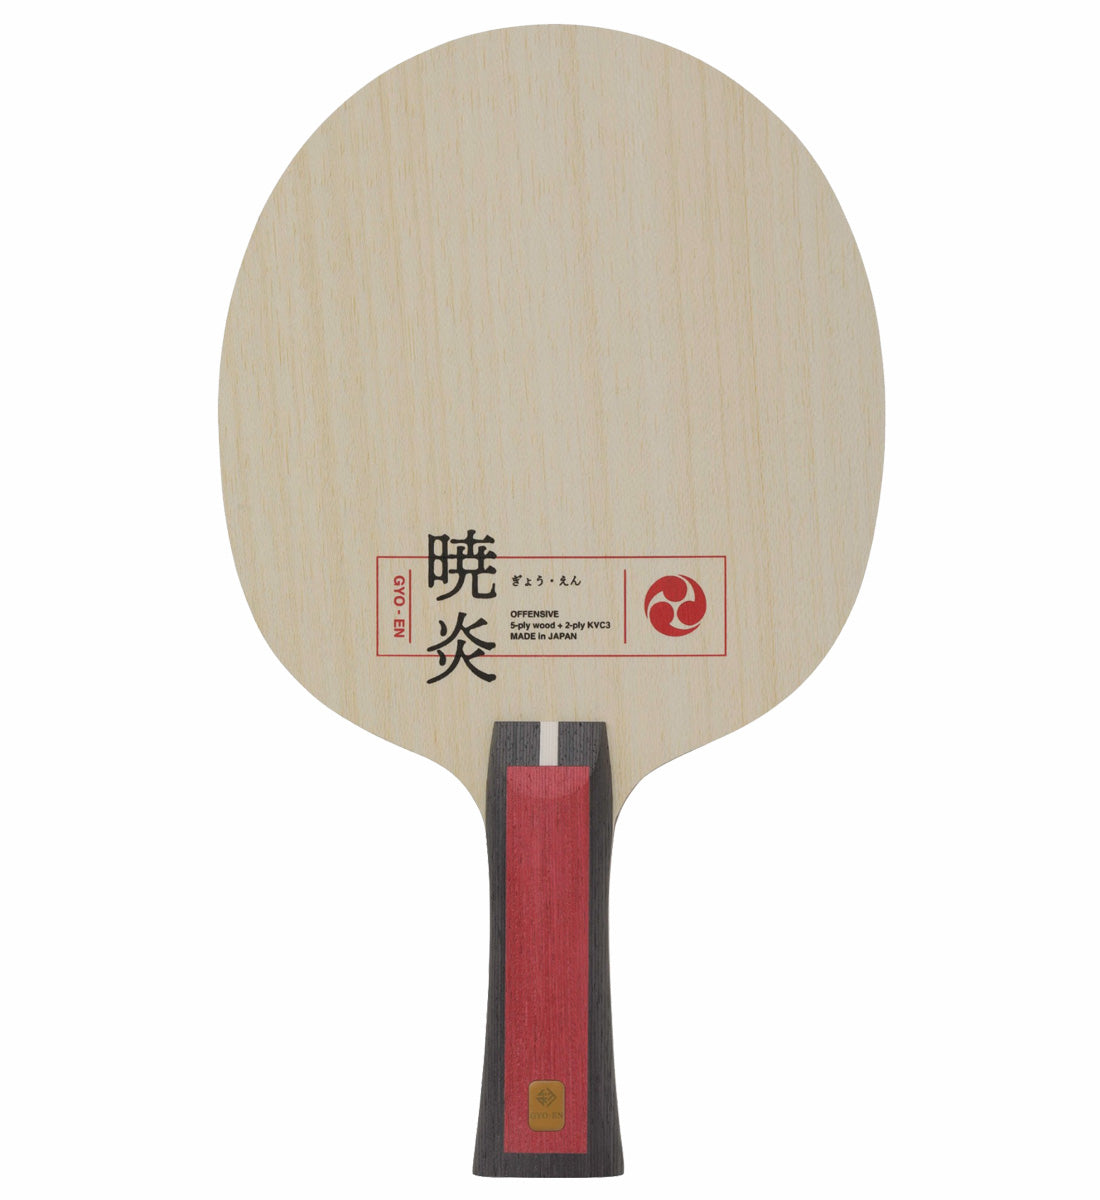 Nittaku Gyo-En - Offensive Table Tennis Blade